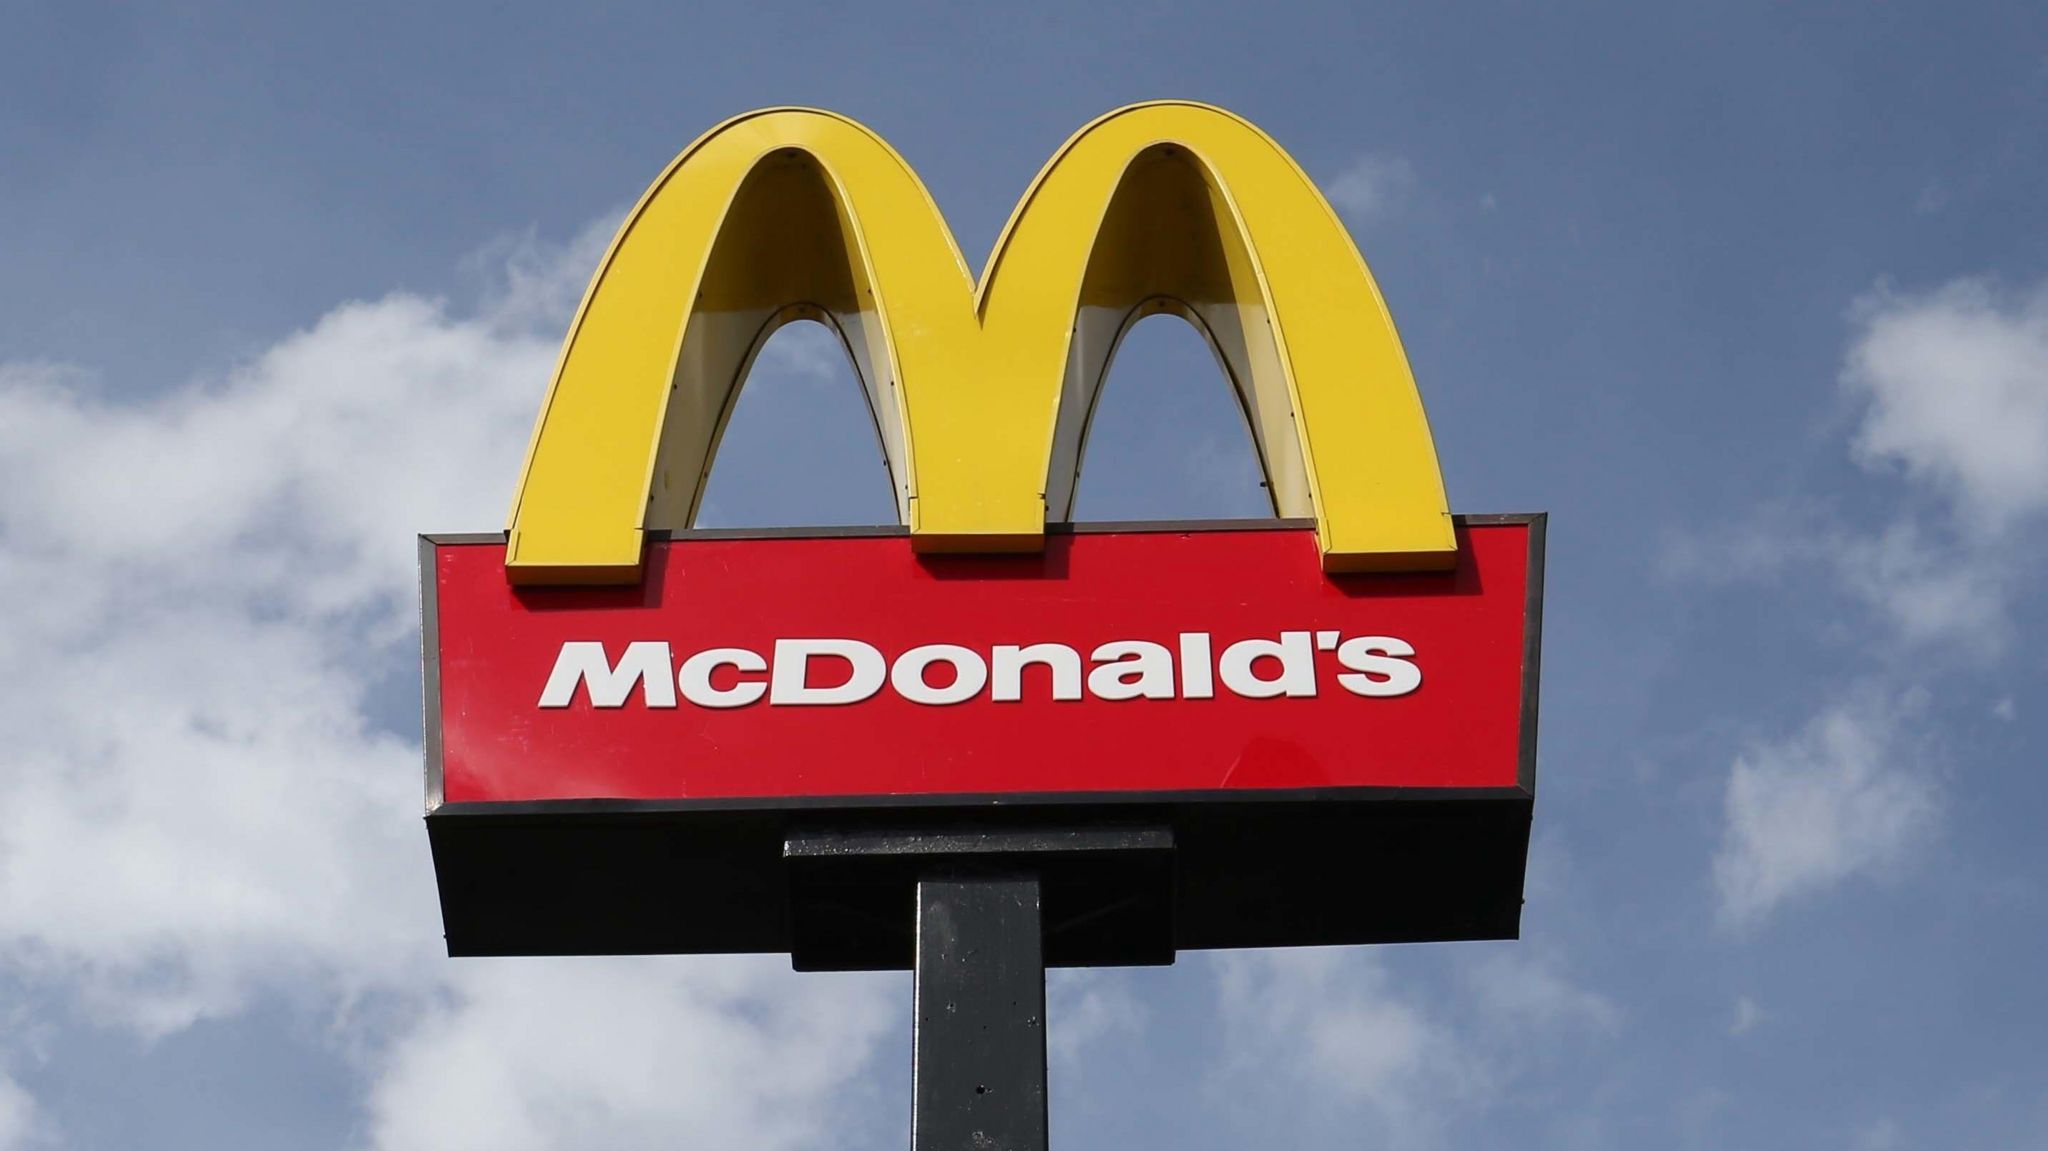 McDonald's sign set against a blue sky